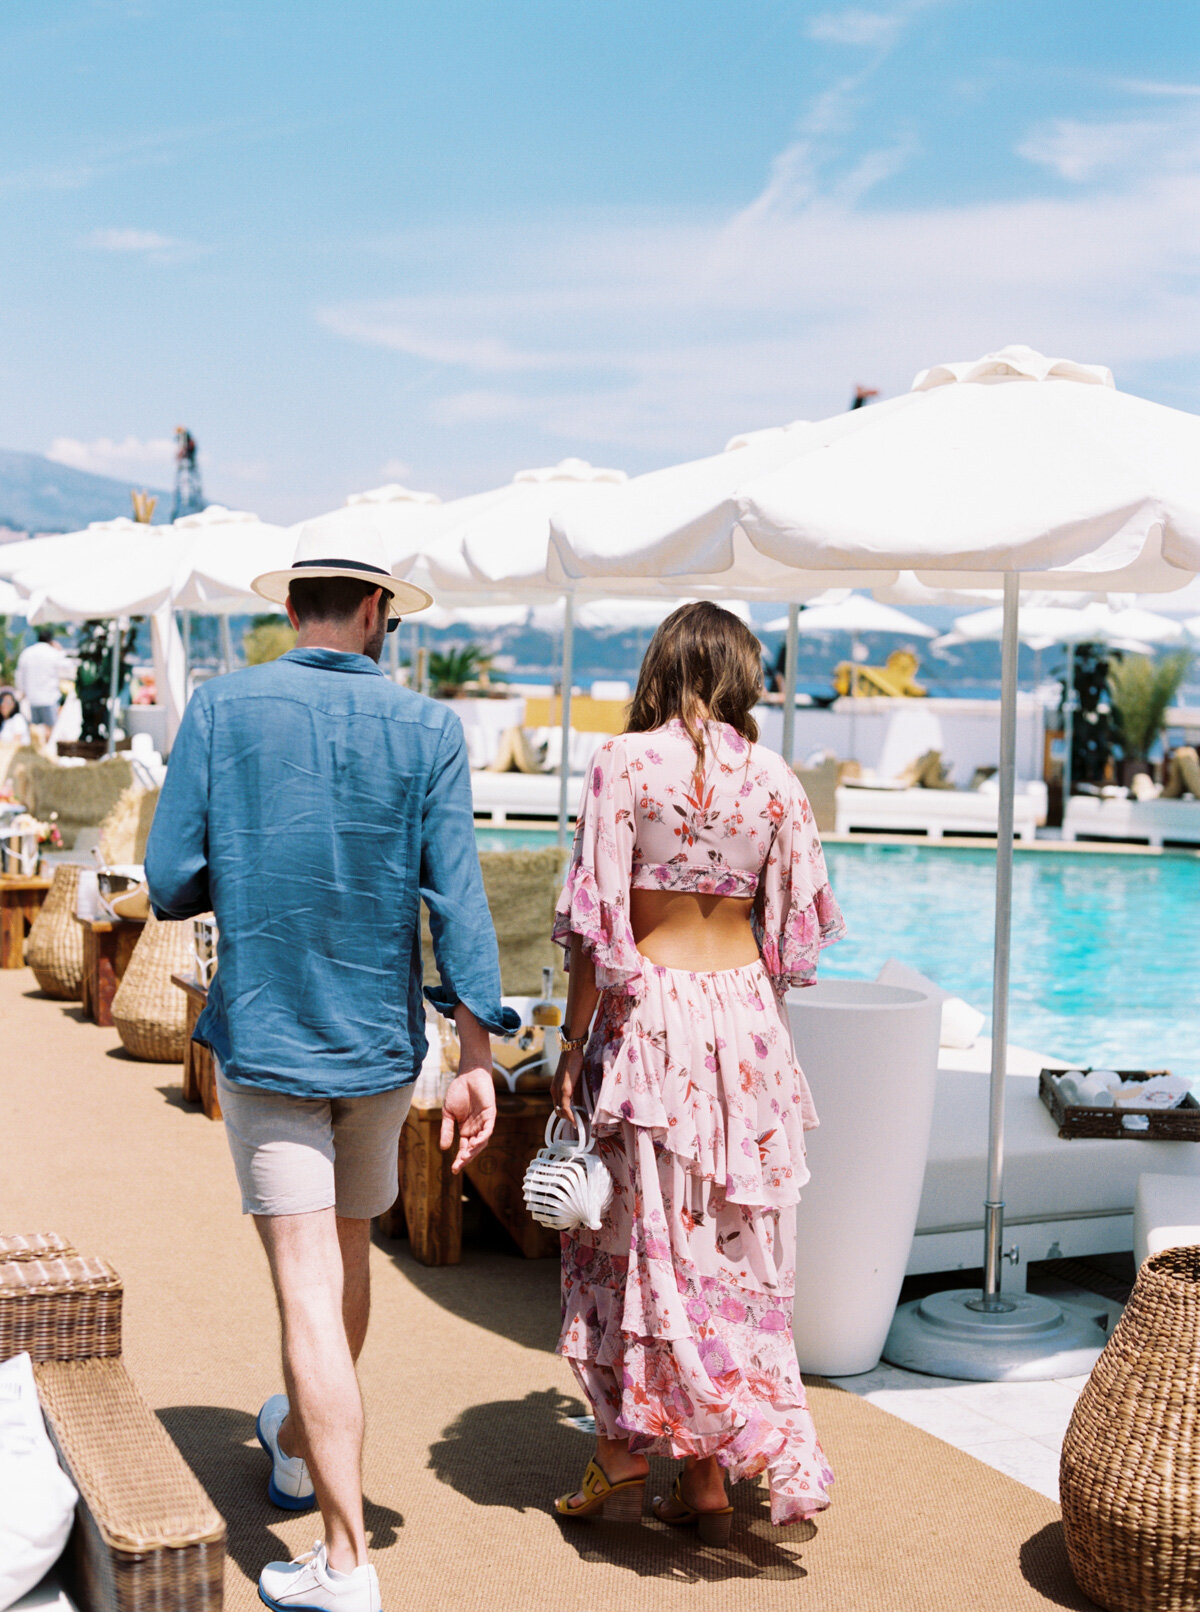 Nikki-Beach-Club-Pool-Monaco-Nice-Saint Tropez-Welcome-Dinner-Katie-Grant-destination-wedding (9 of 22).jpg